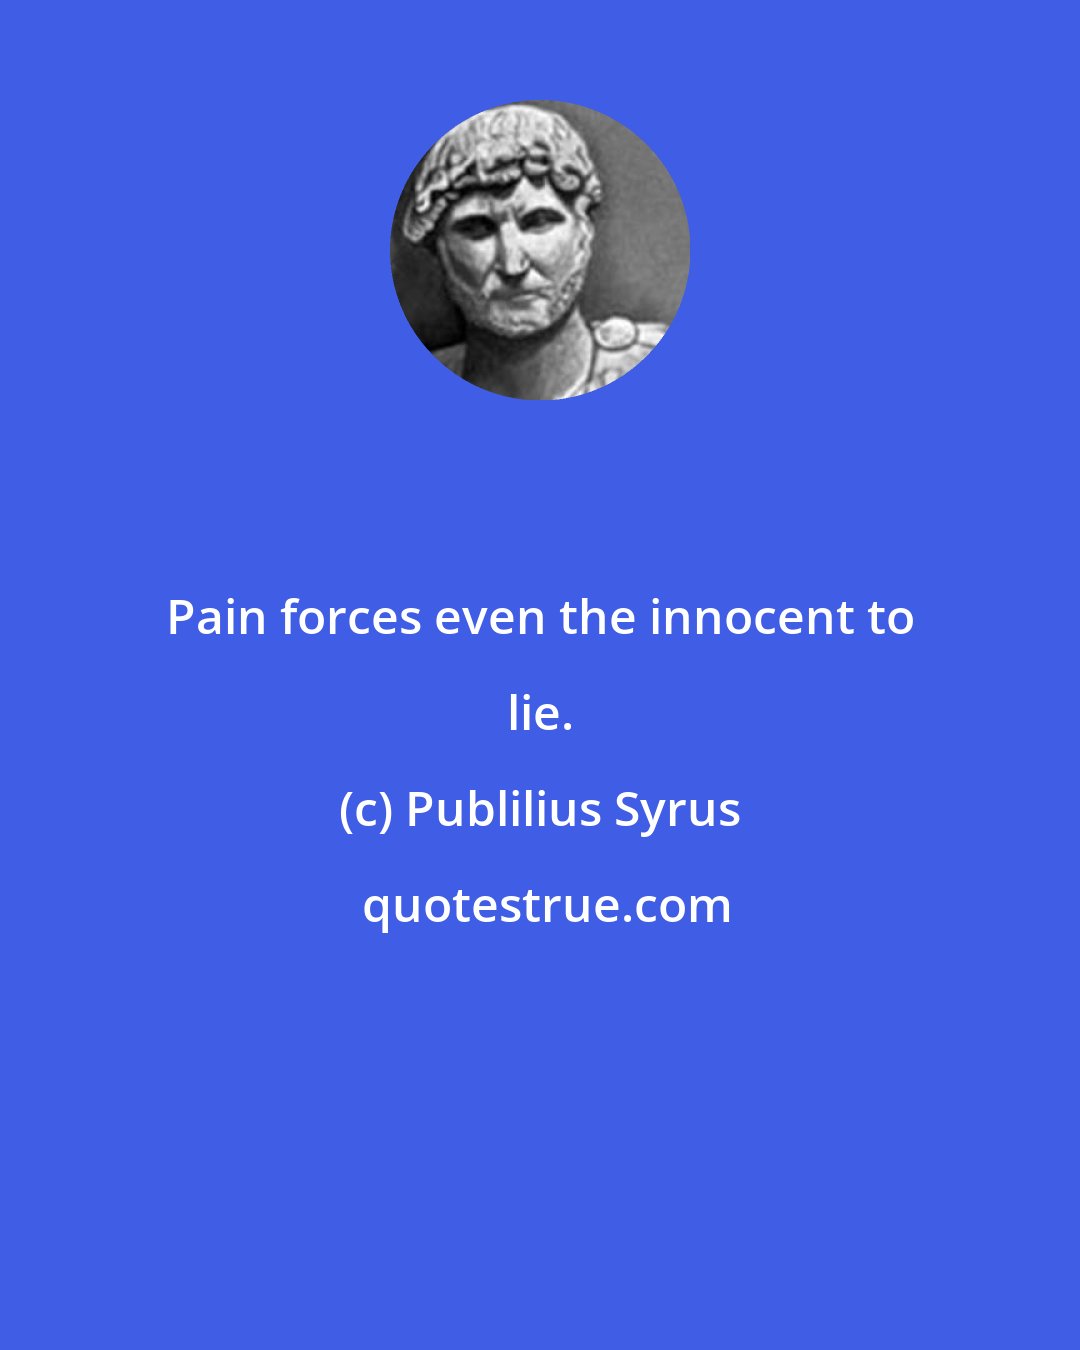 Publilius Syrus: Pain forces even the innocent to lie.